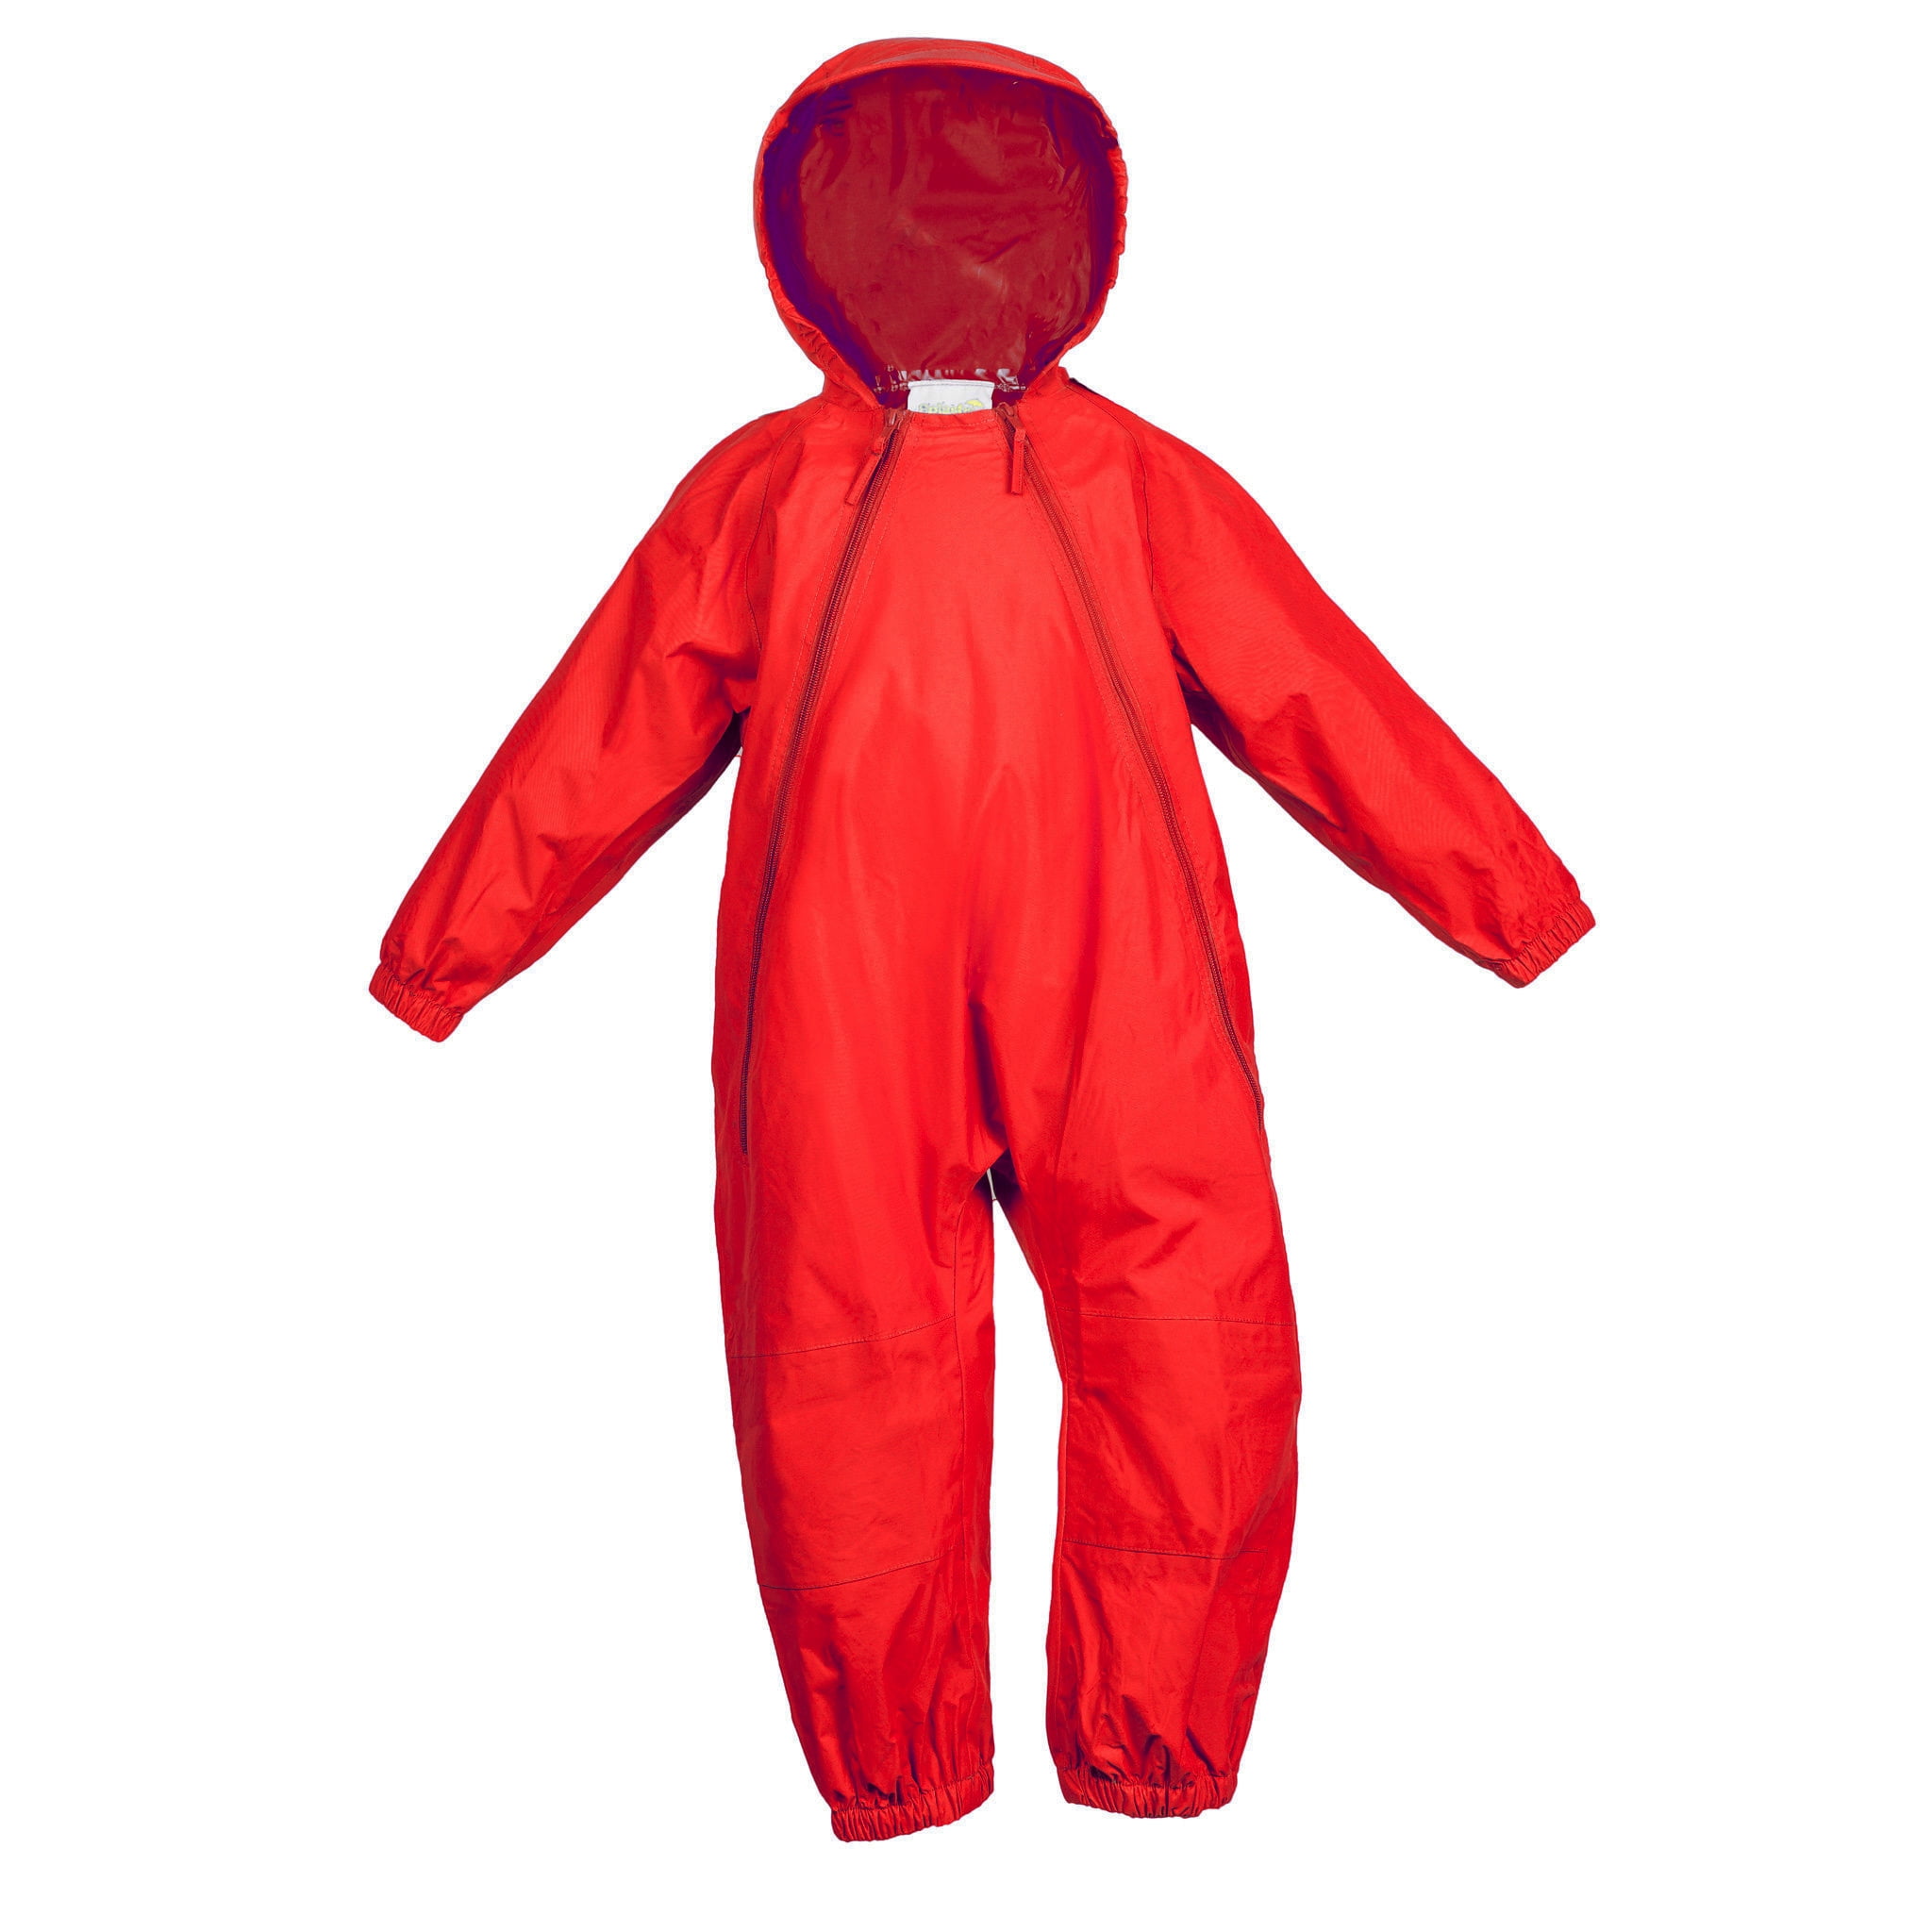 Splashy Children's One Piece Rain Suit and Mud Suit (Red, 5T) - Walmart.com